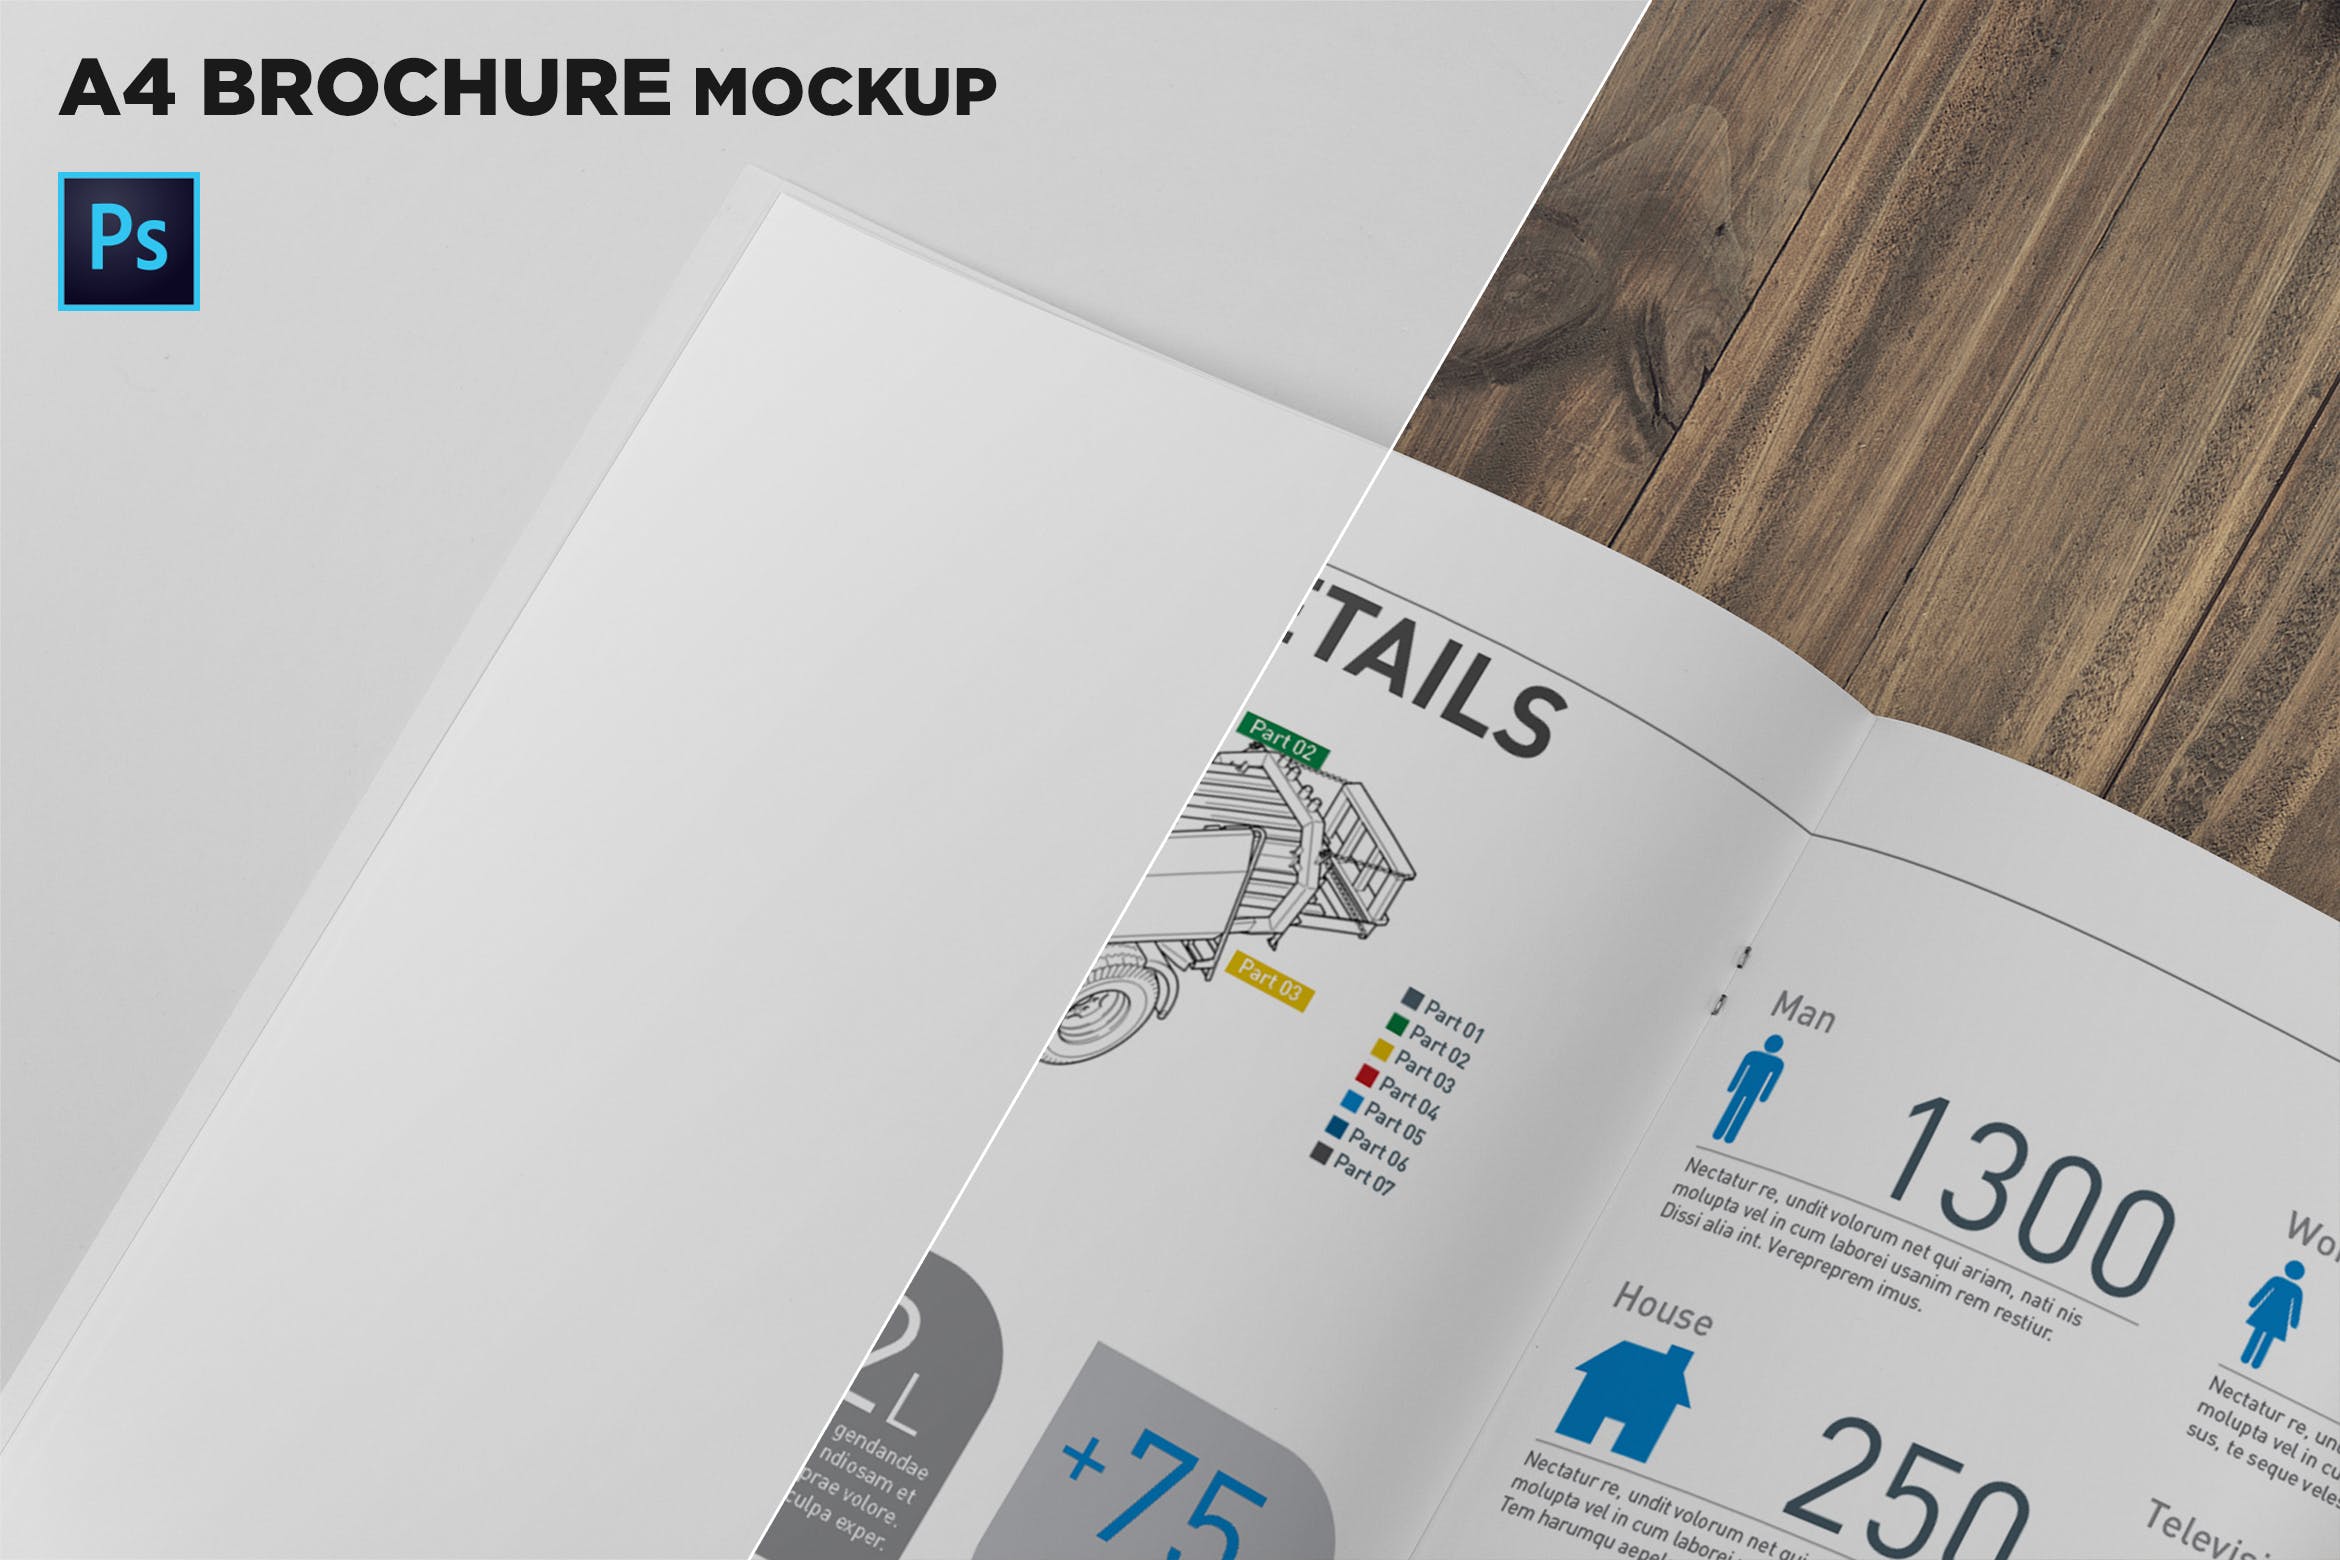 A4尺寸企业/品牌宣传册内页特写样机第一素材精选模板 A4 Brochure Page Closeup Mockup插图